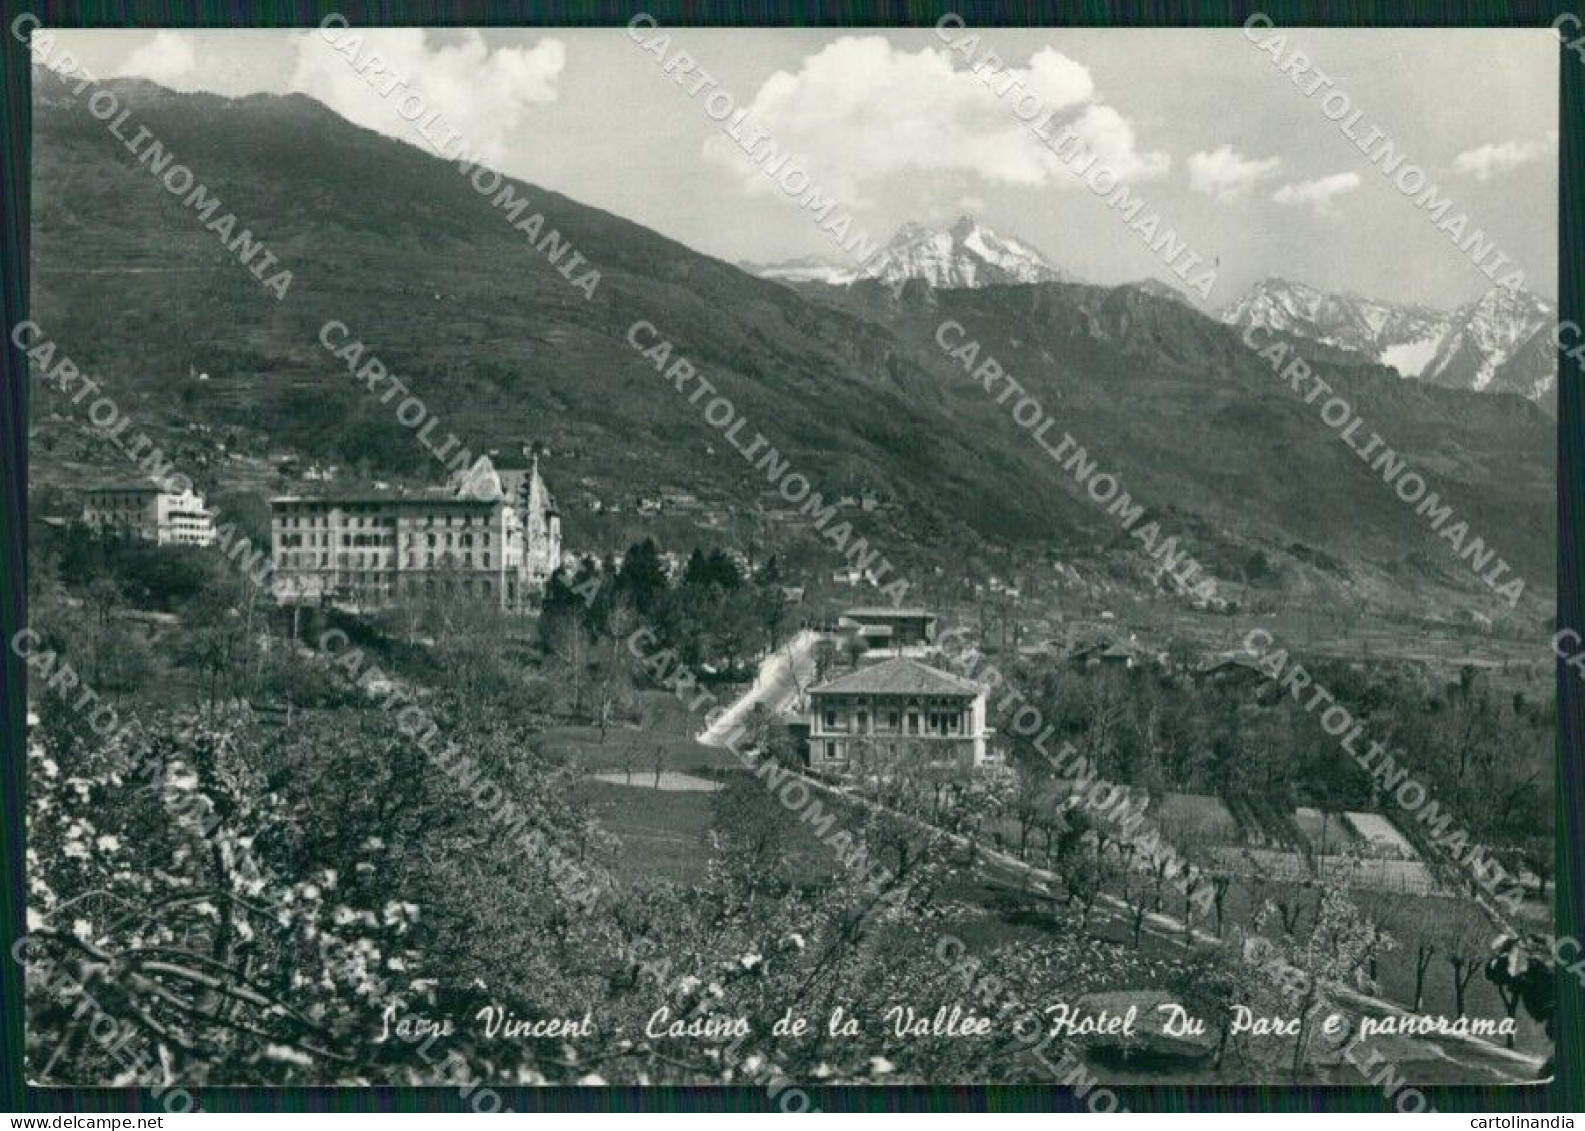 Aosta Saint Vincent Foto FG Cartolina KB1834 - Aosta